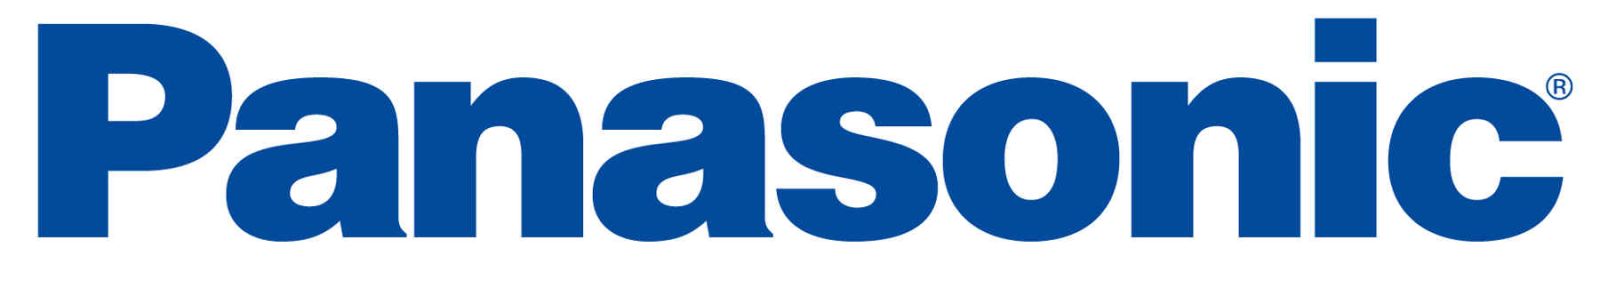 Panasonic TV logo